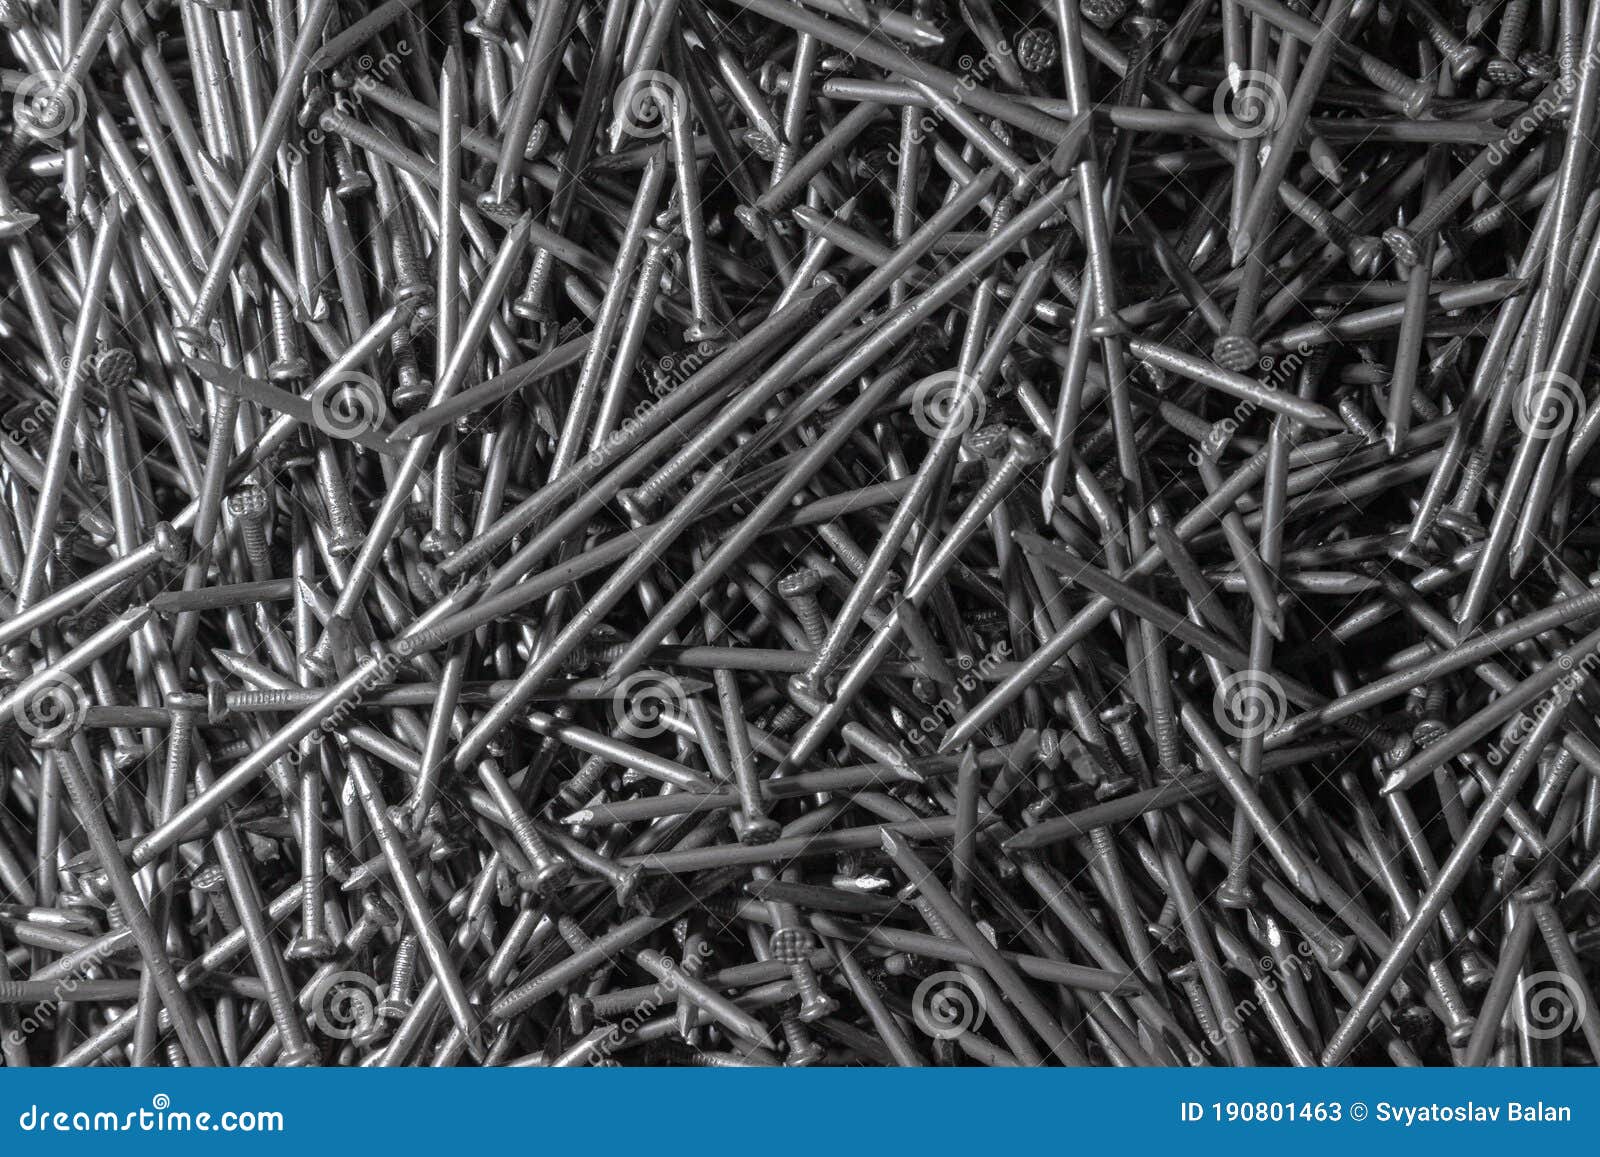 Metal Nails. Texture. Many New Long Iron Nails Stock Image - Image of ...